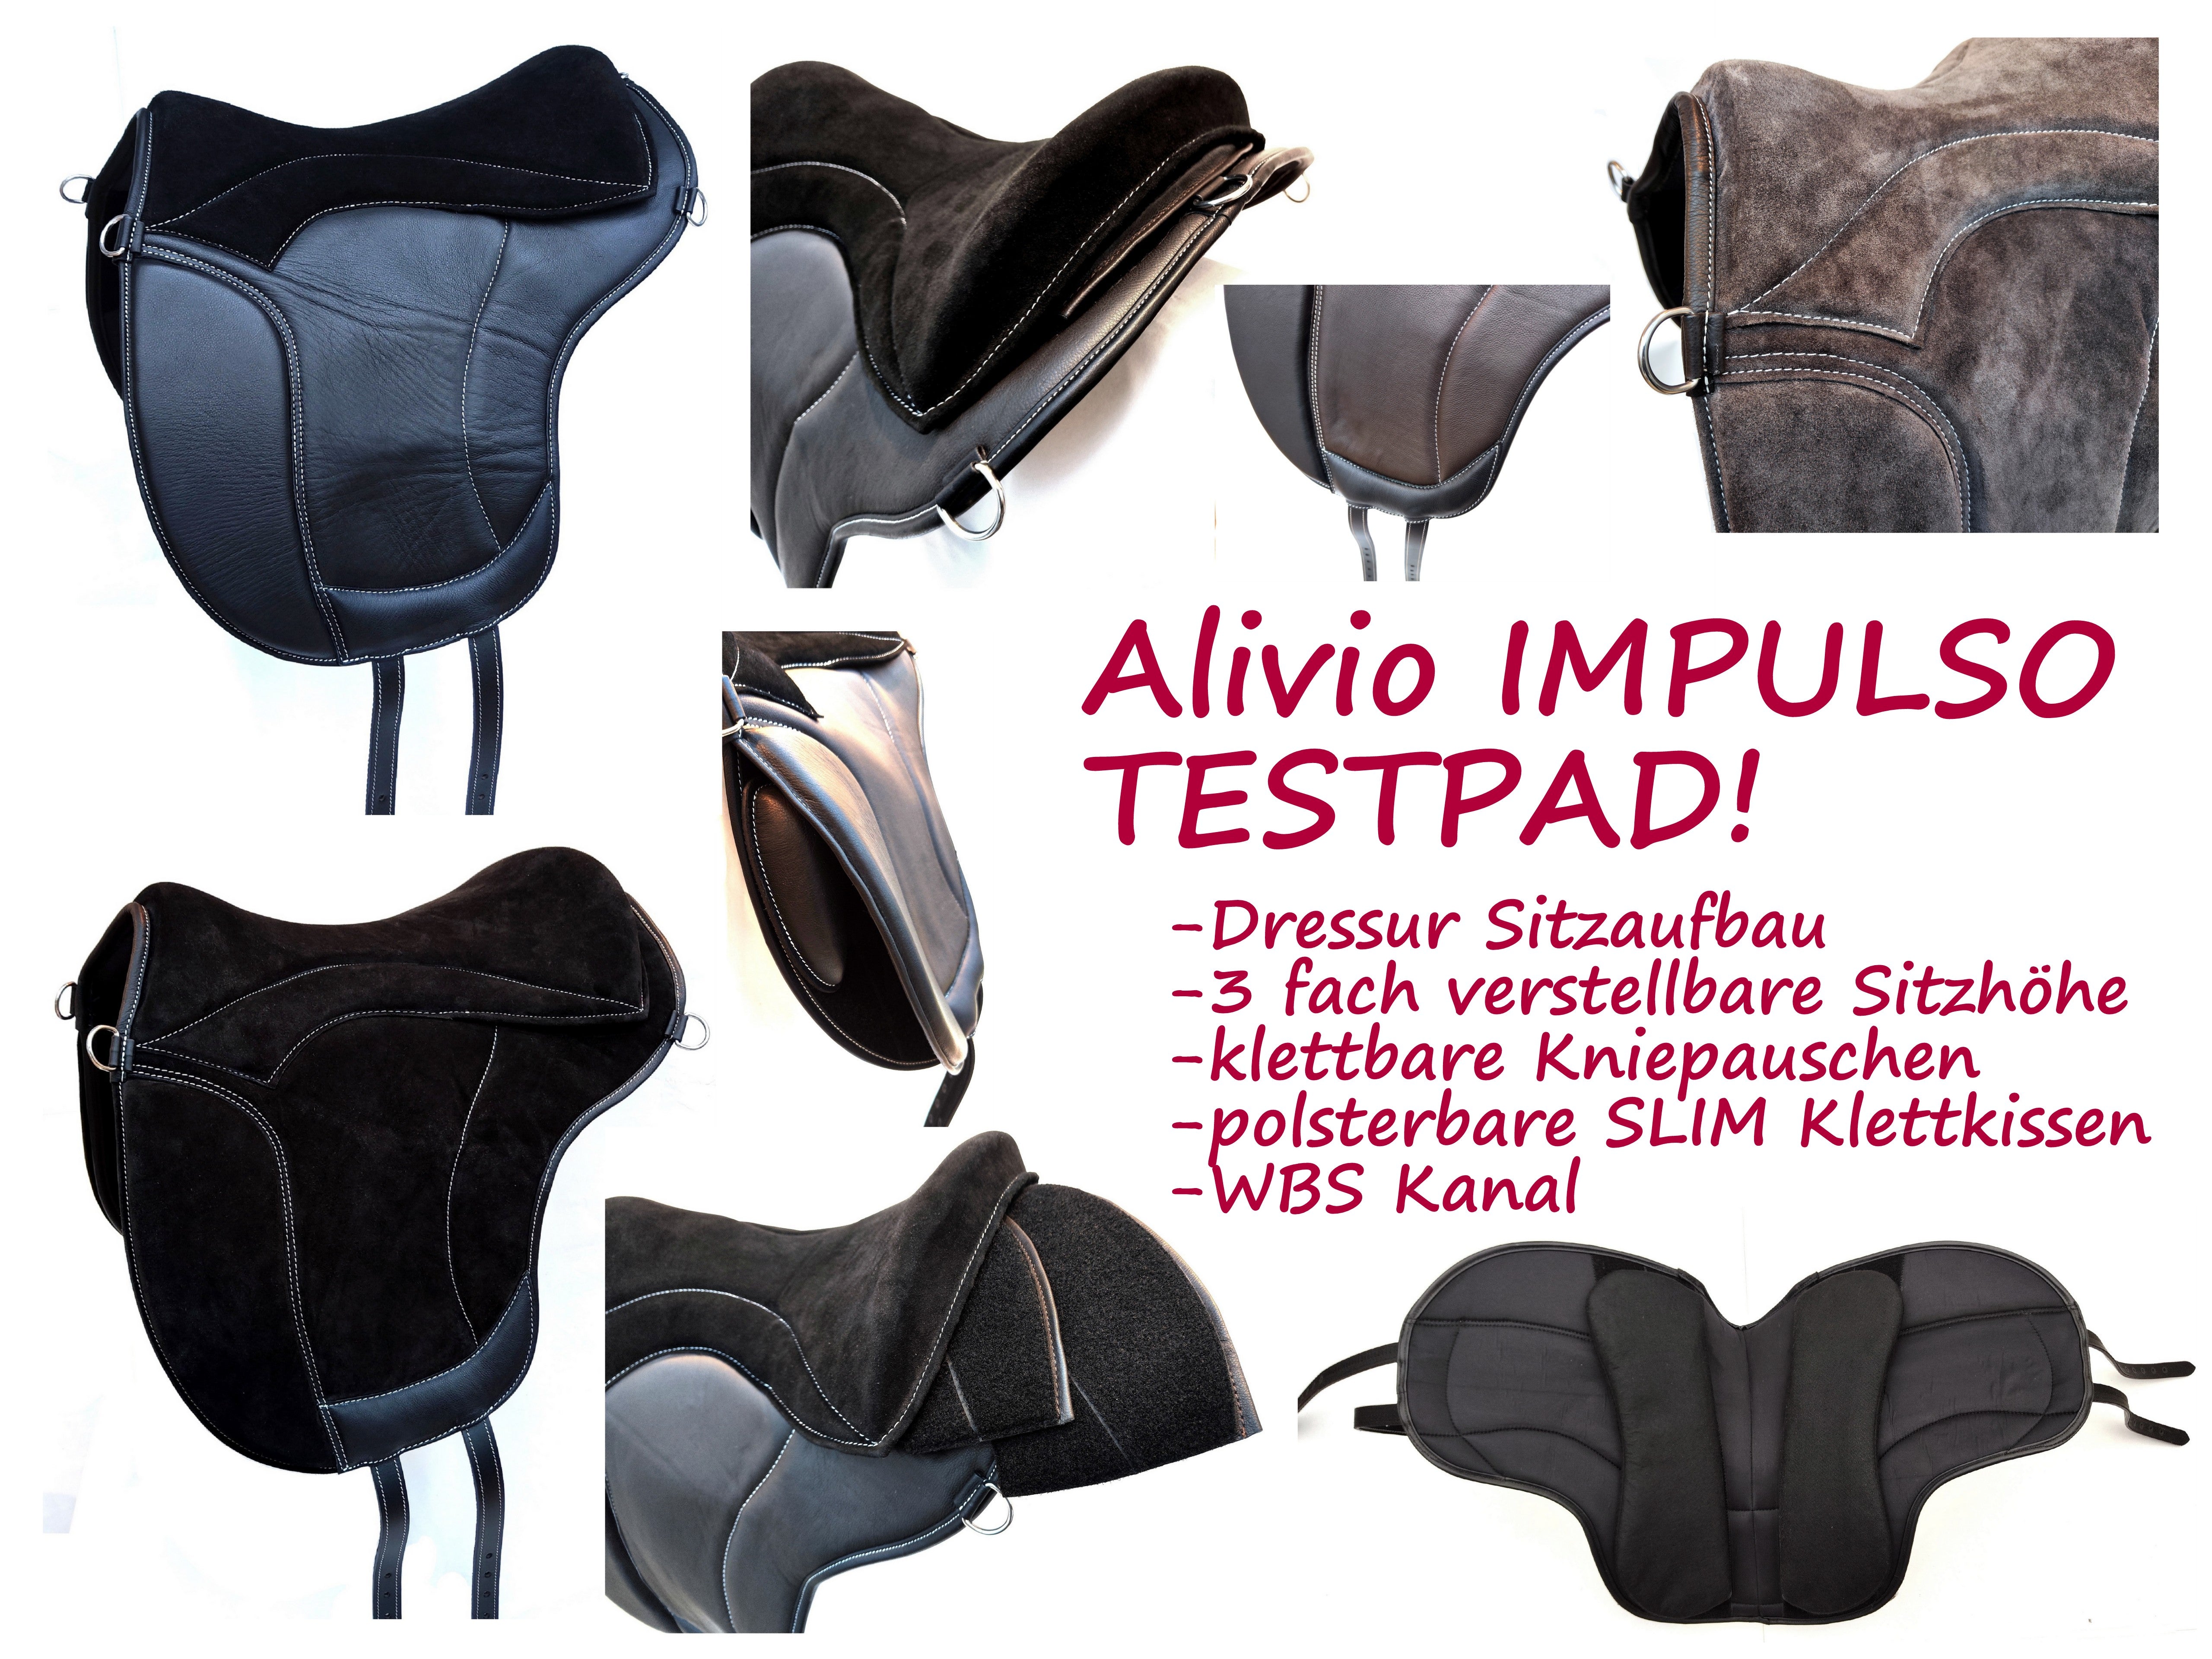 TEST PAD "ALIVIO IMPULSO" dressage riding pad - WBS channel - SLIM felt cushion - knee blocks